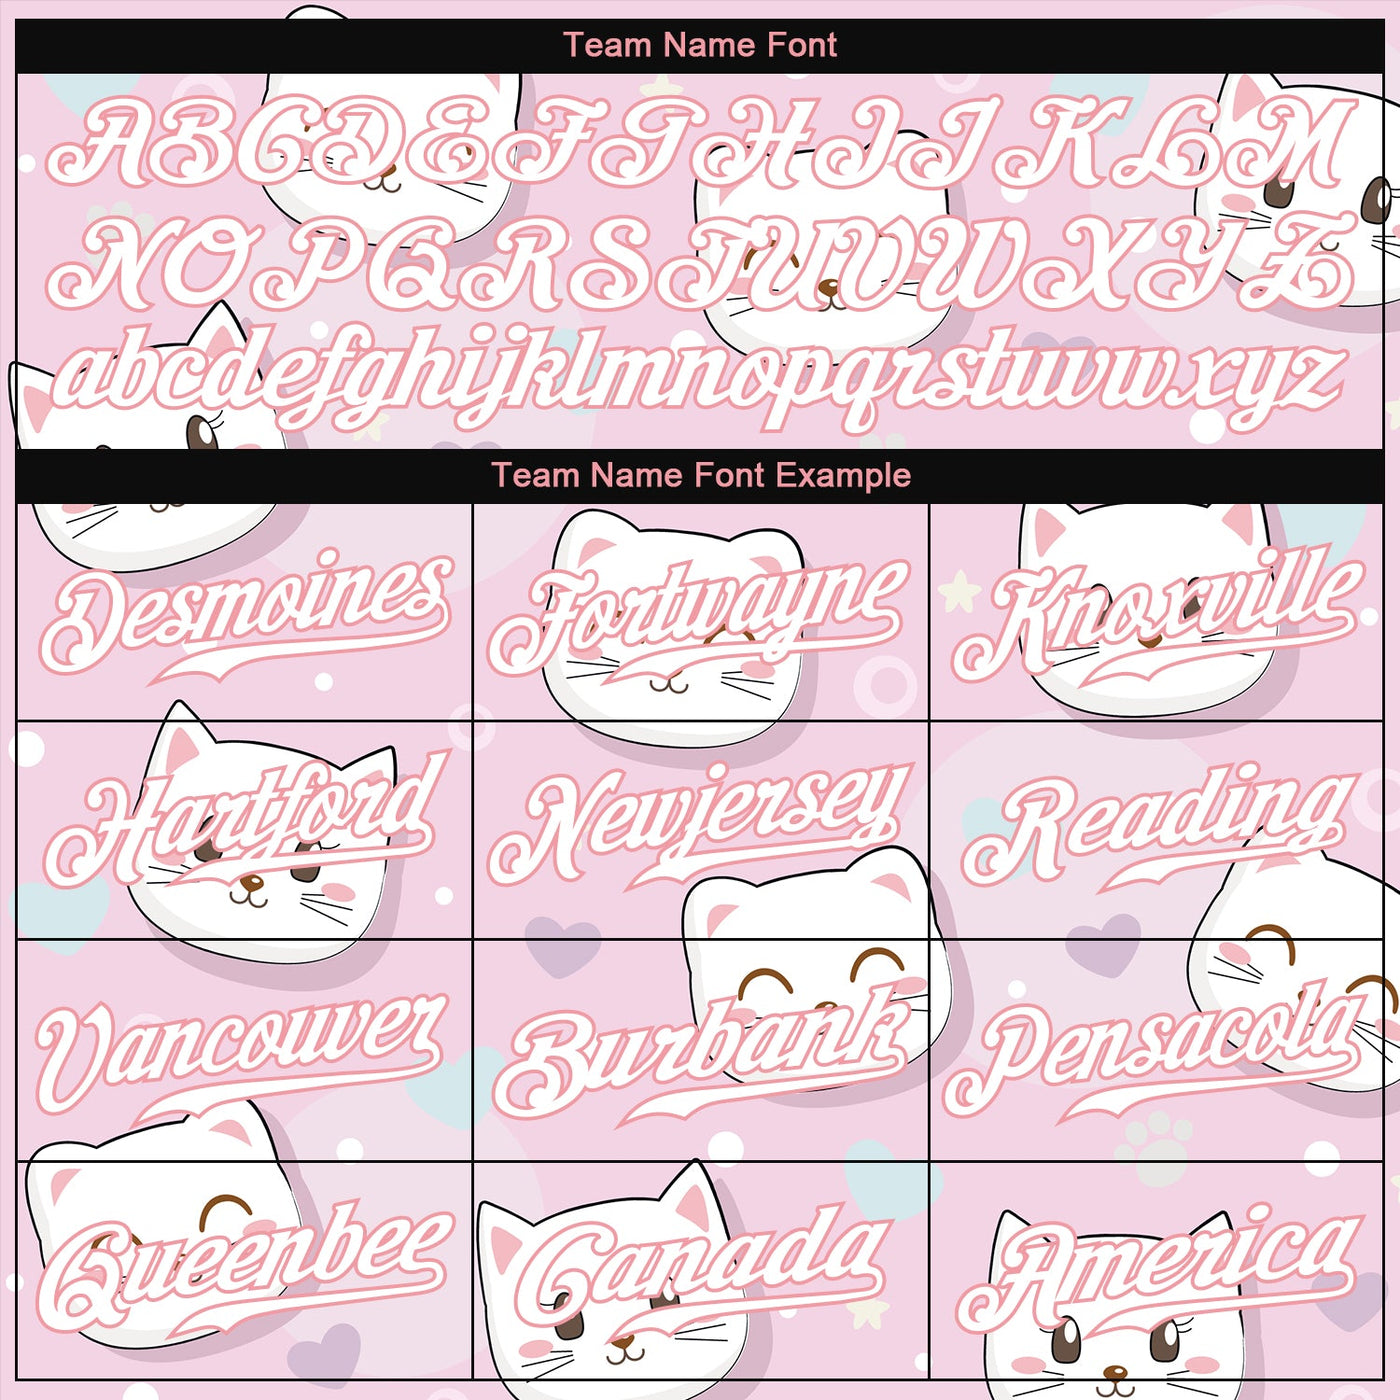 Custom Light Pink White-Light Pink 3D Pattern Design Cats Authentic Baseball Jersey - Owls Matrix LTD